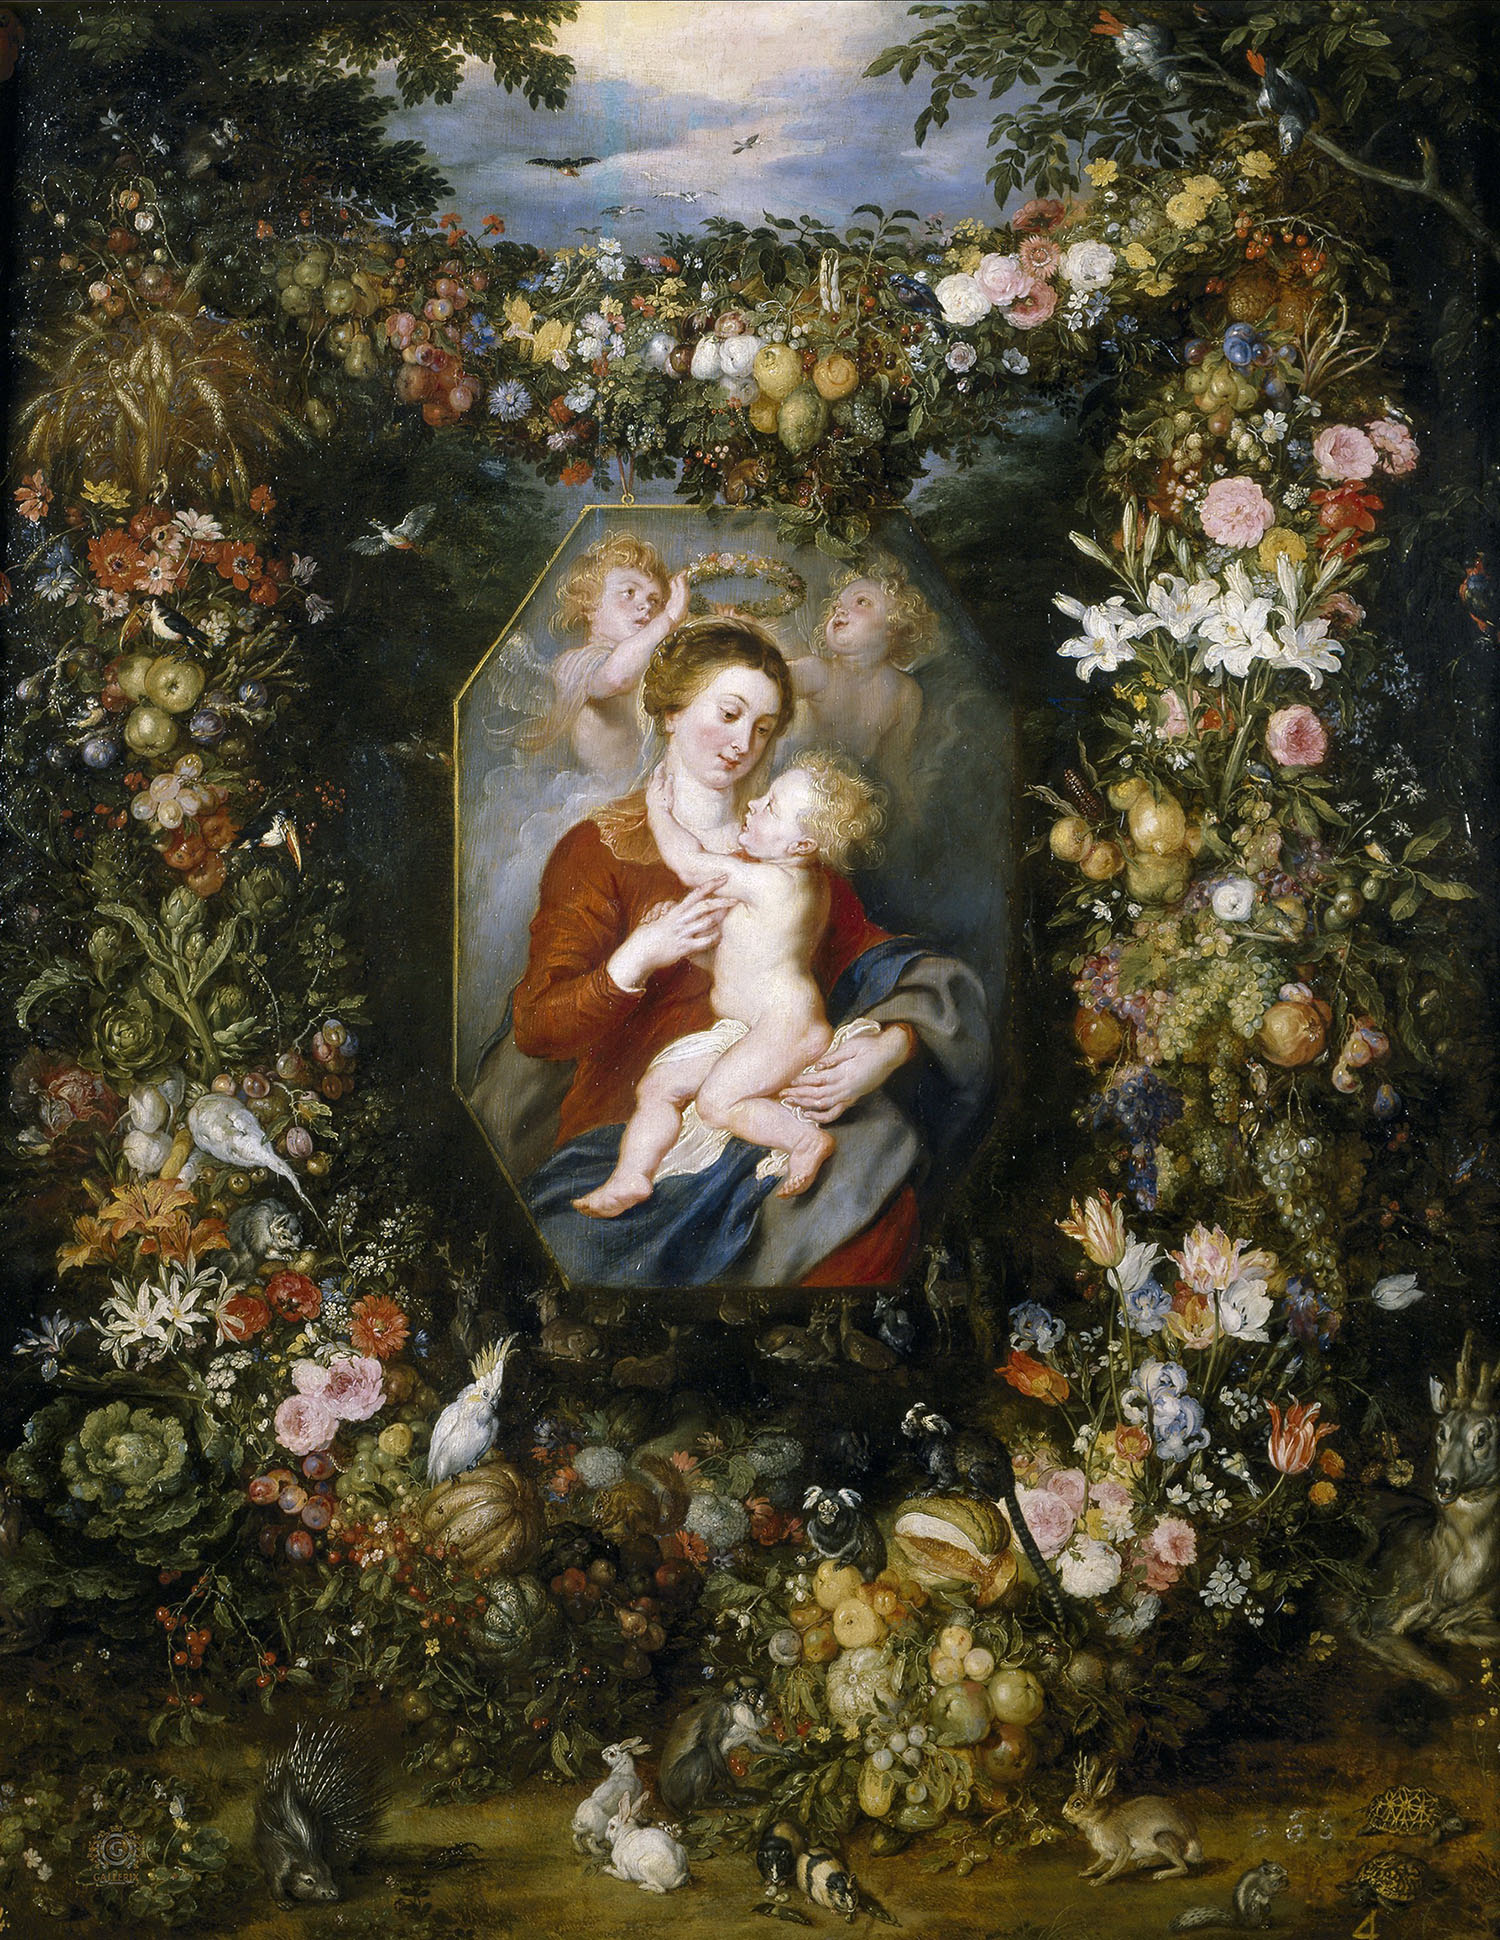 Питер Пауль Рубенс, Ян Брейгель Старший. "Мадонна с Младенцем, окруженные цветами и фруктами". 1617-1620. Прадо, Мадрид.